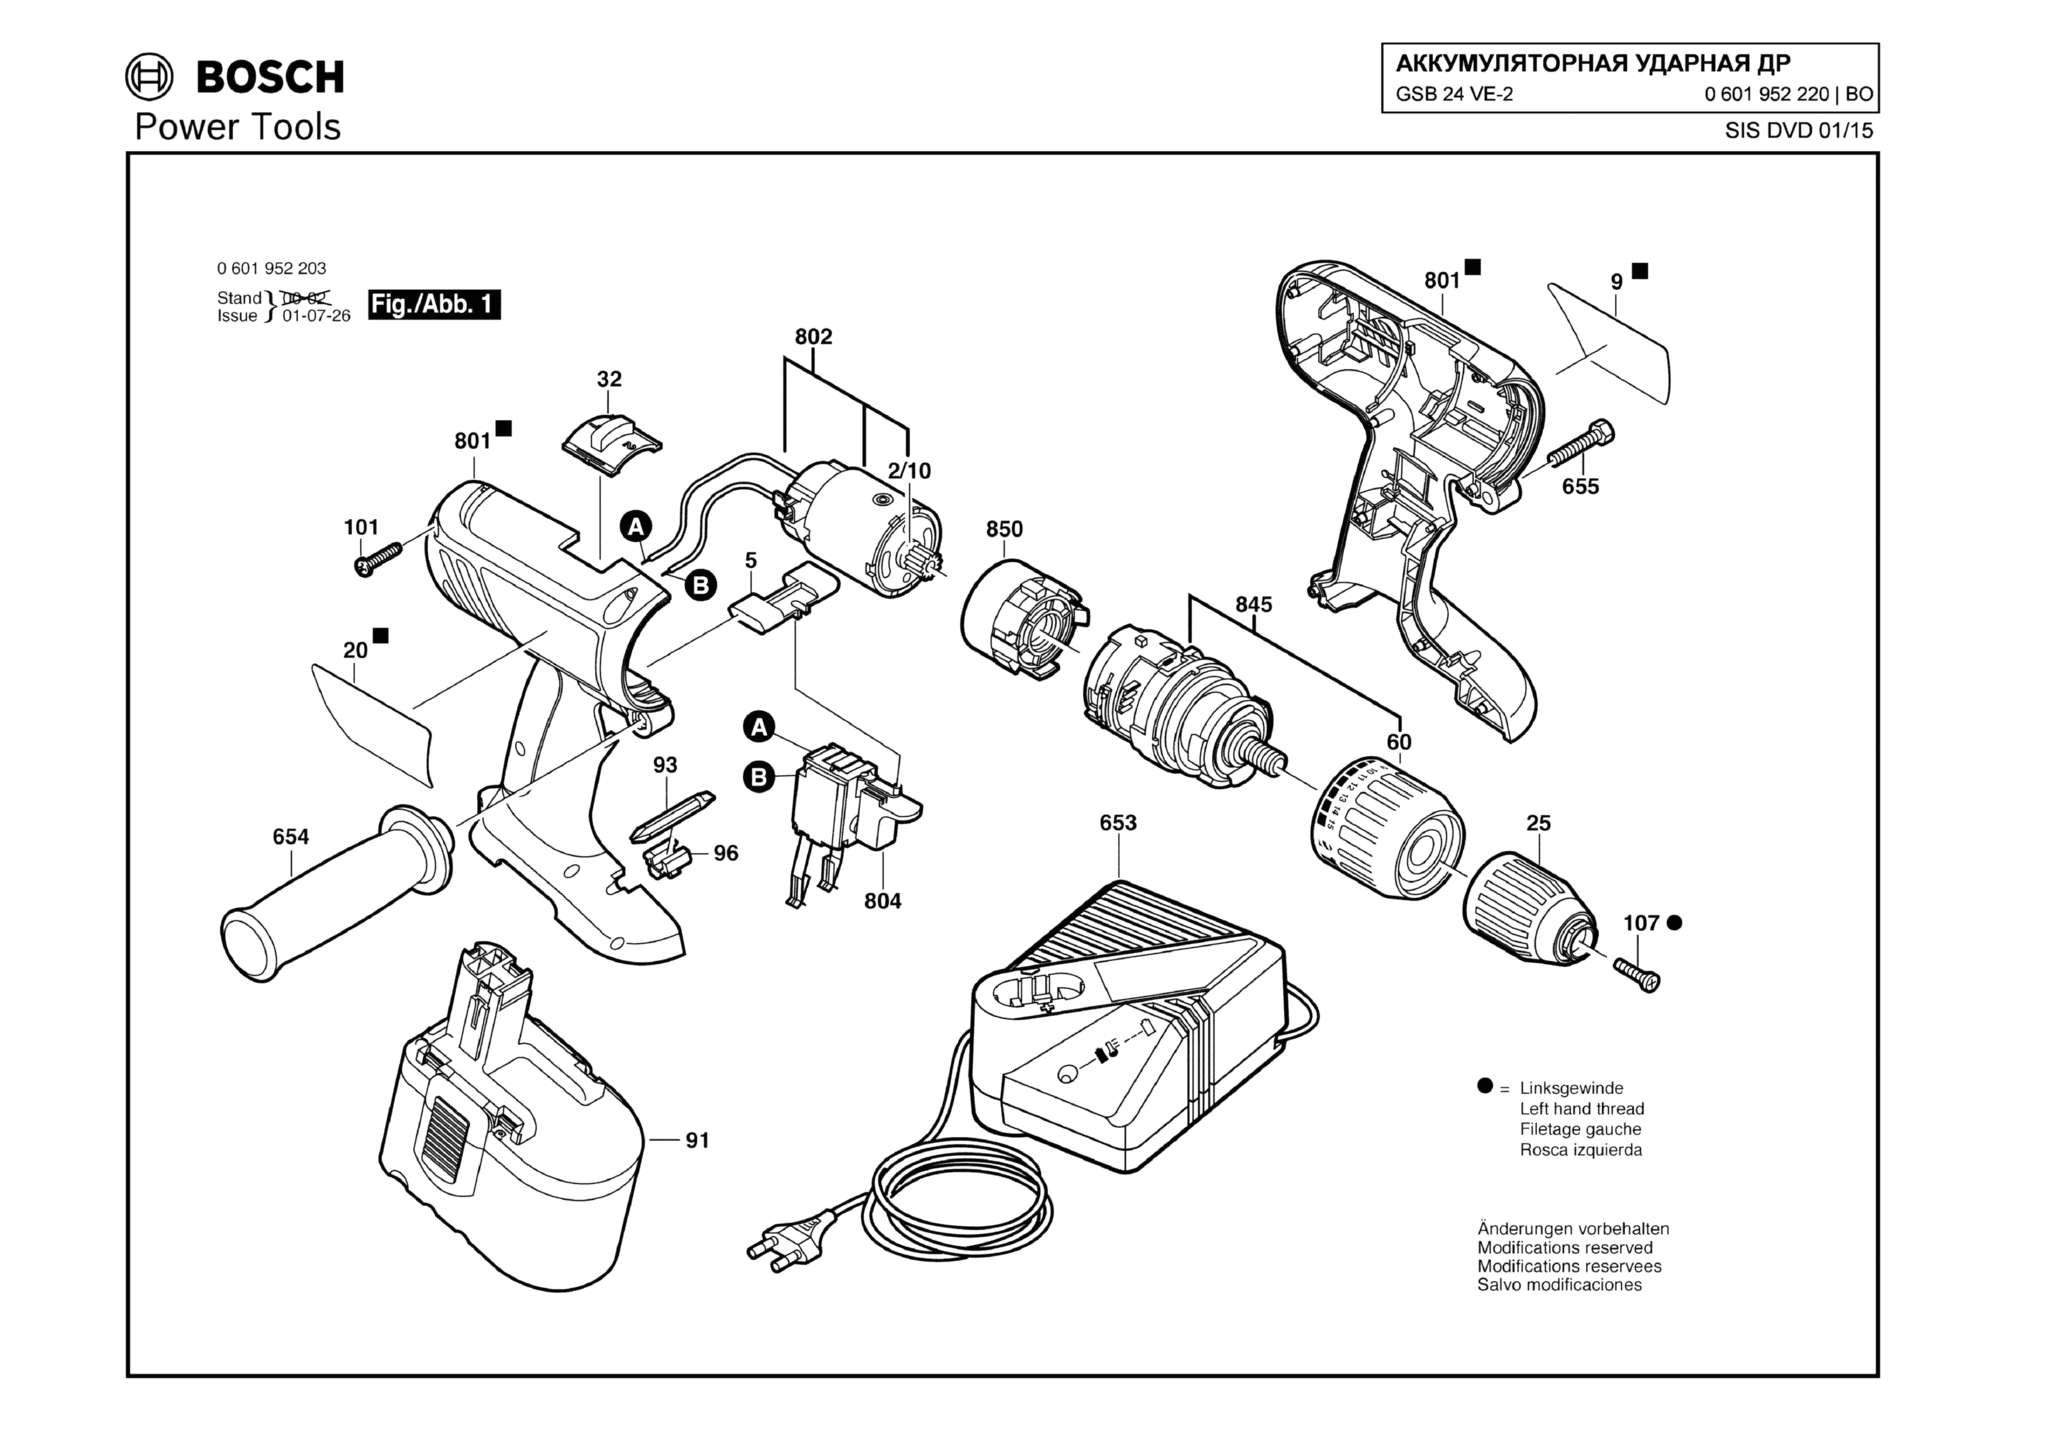 Запчасти, схема и деталировка Bosch GSB 24 VE-2 (ТИП 0601952220)